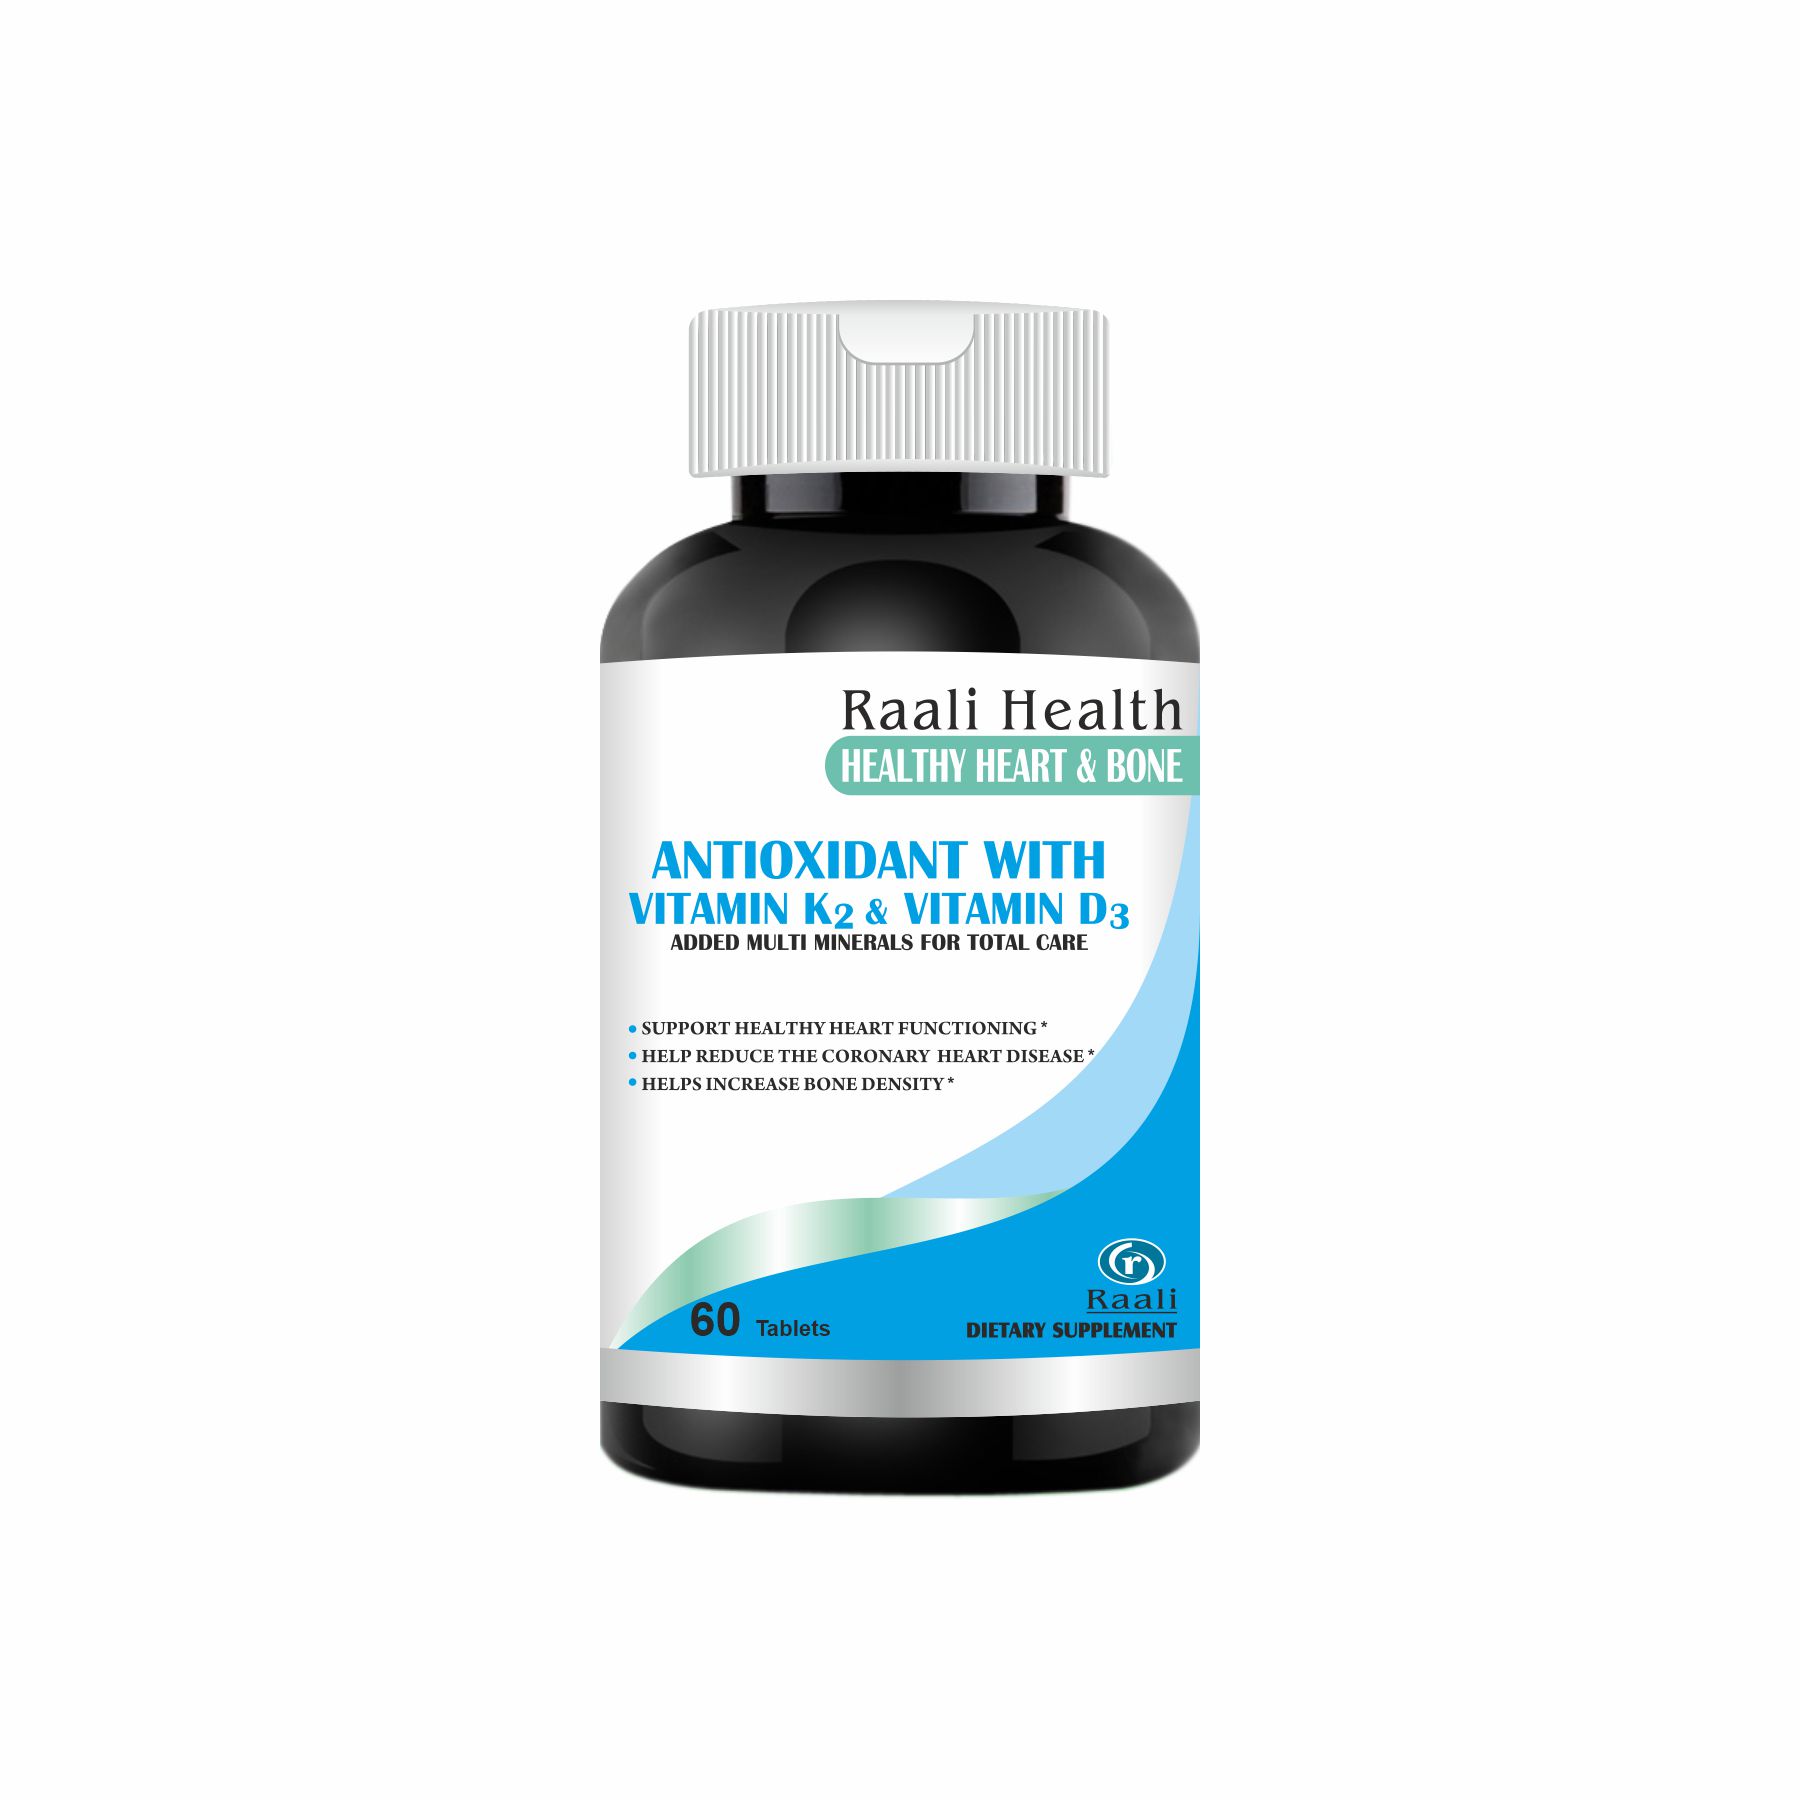 Antioxidant with vitamin K2, & Vitamin D3, healthy heart and bone